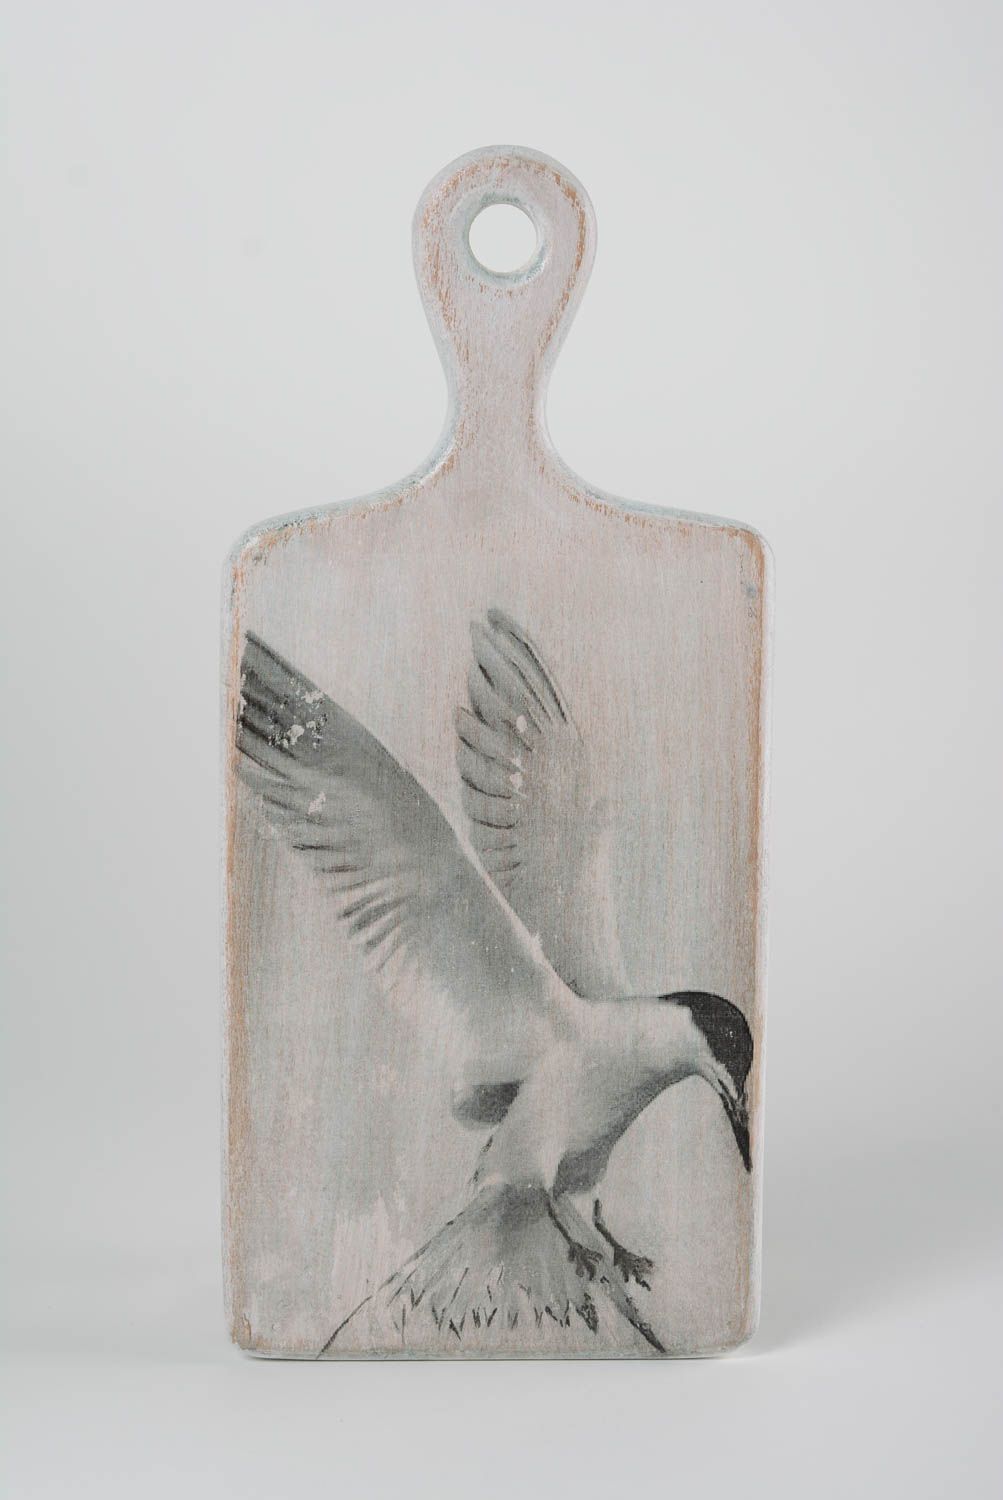 Unusual handmade decoupage wooden chopping board with bird image photo 1